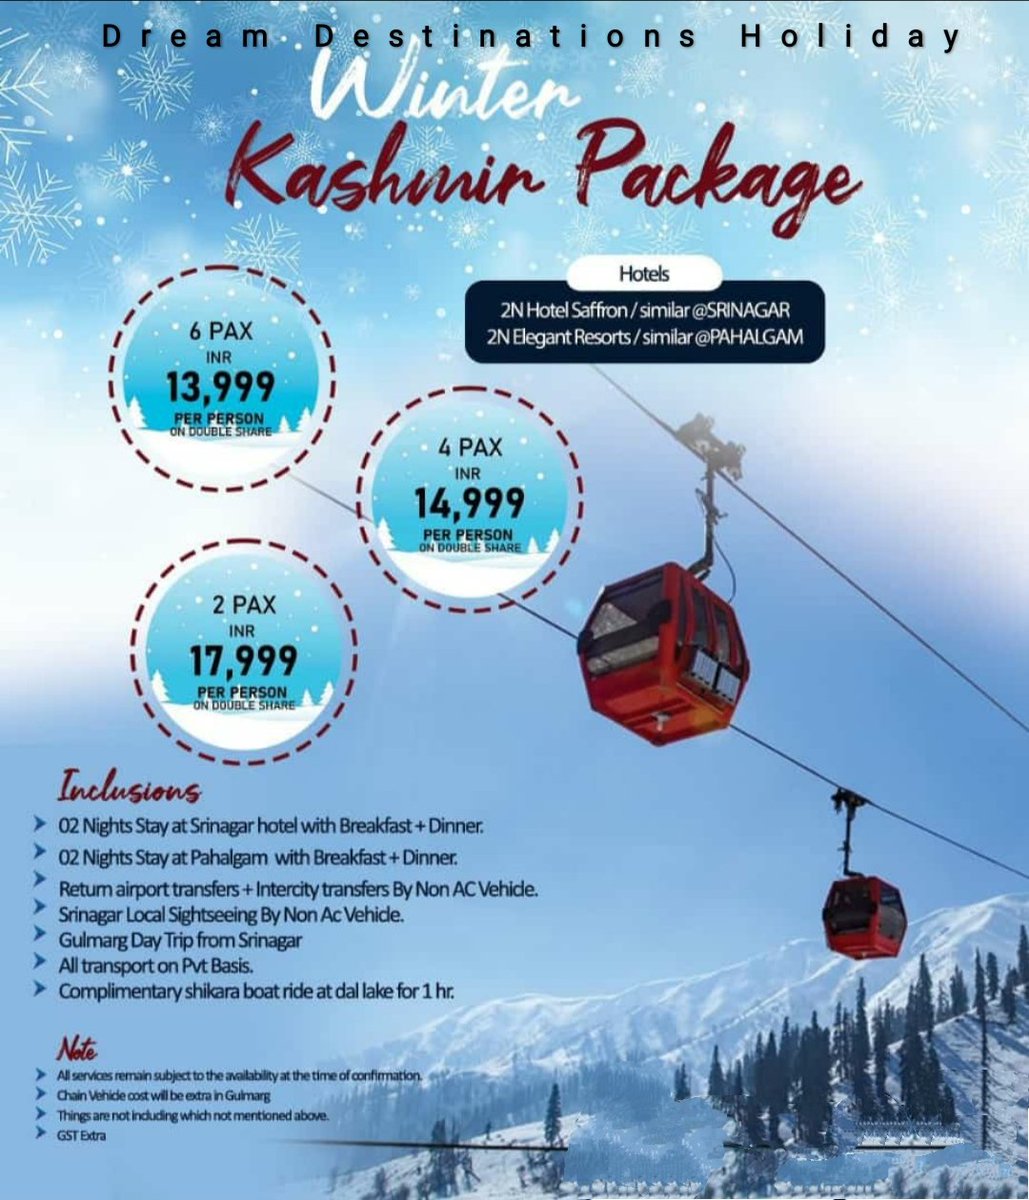 Kashmir 😍 

Book your Package with Dream Destinations Holiday 

Call @9893077179

#dreamdestinationsholiday #dreamdestinationsholidayjhansi #jhansitravelagency #Kashmir #kashmirpackages #kashmirvalley #gulmarg #snow #sonmarg #pahalgam #Srinagar